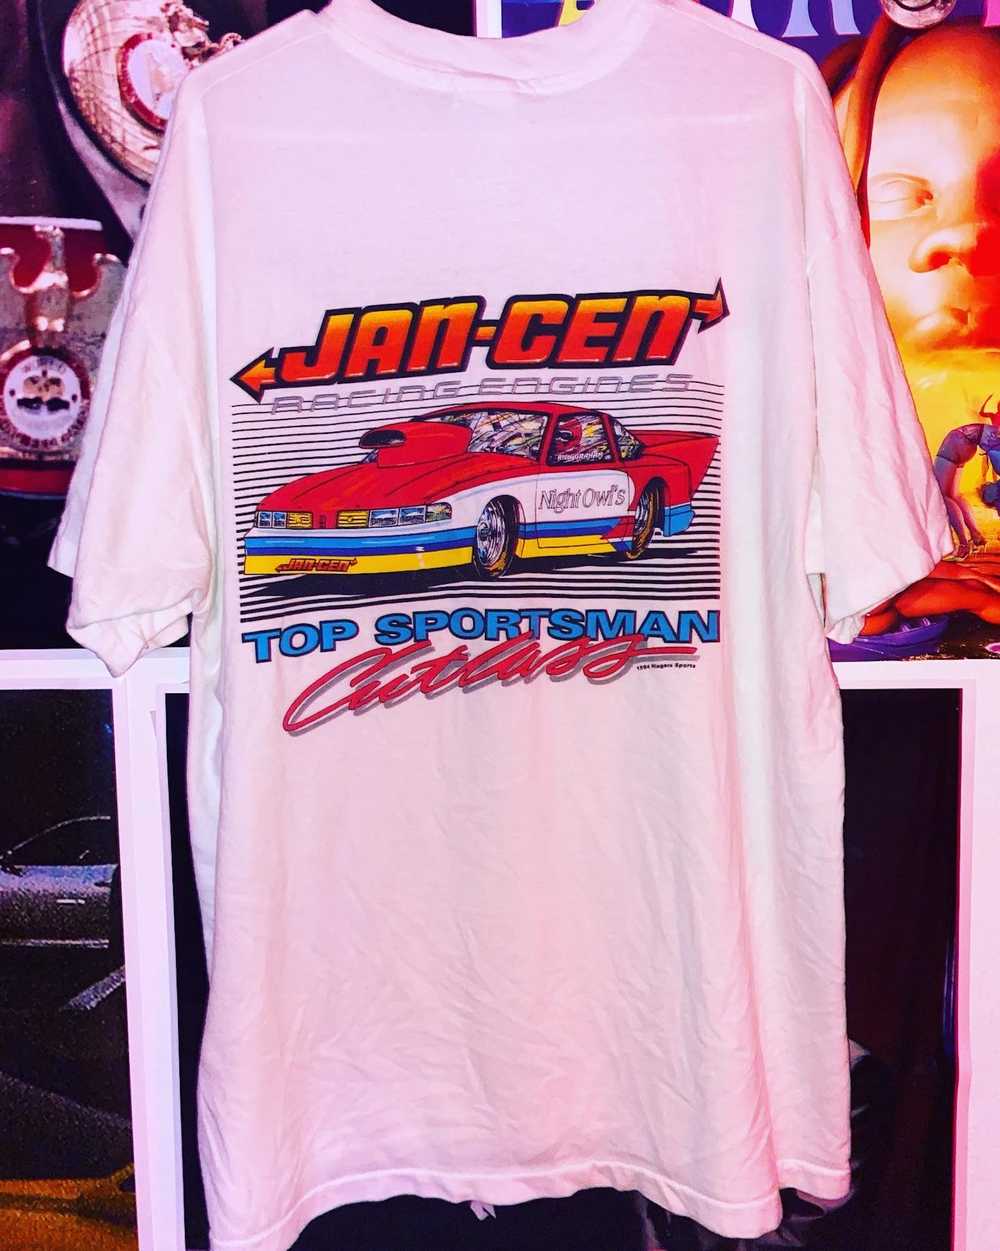 Vintage Vintage Jan-Cen Racing t-shirt - image 2